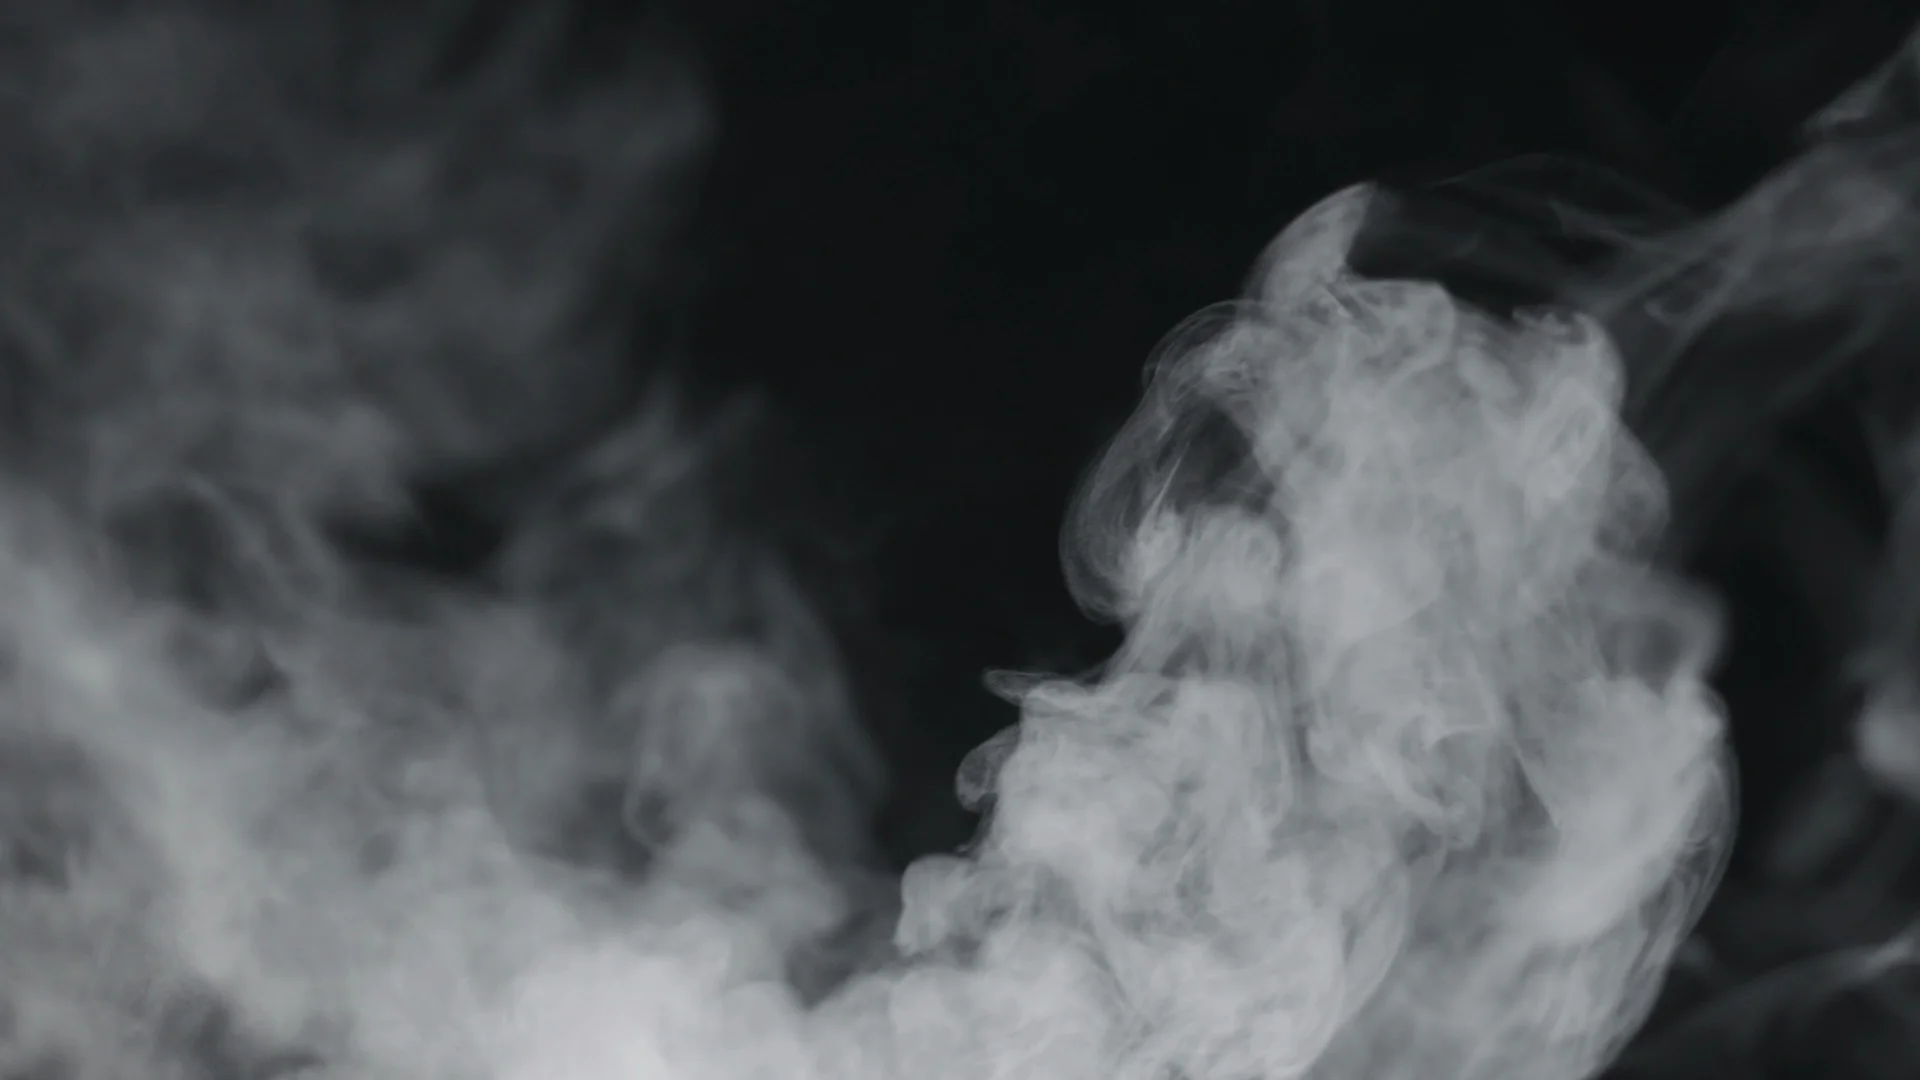 Smoke on black background in slow motion, steam mist on black